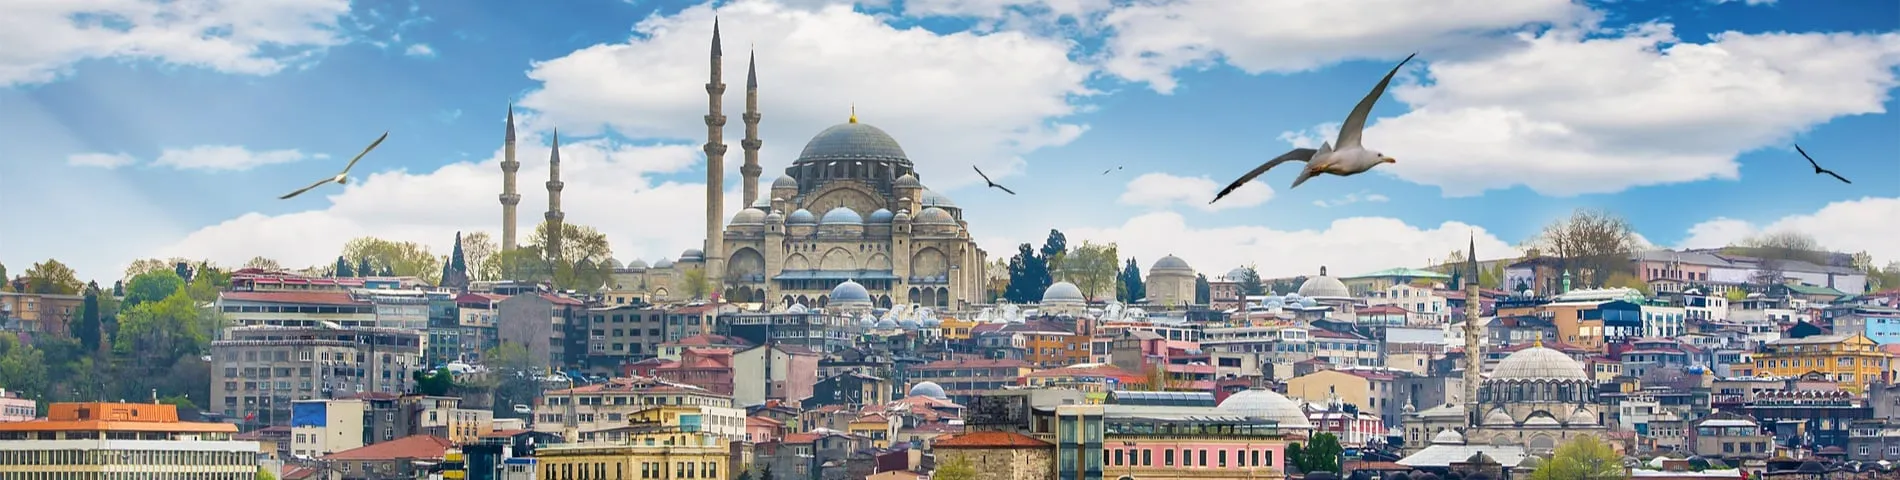 İstanbul - 